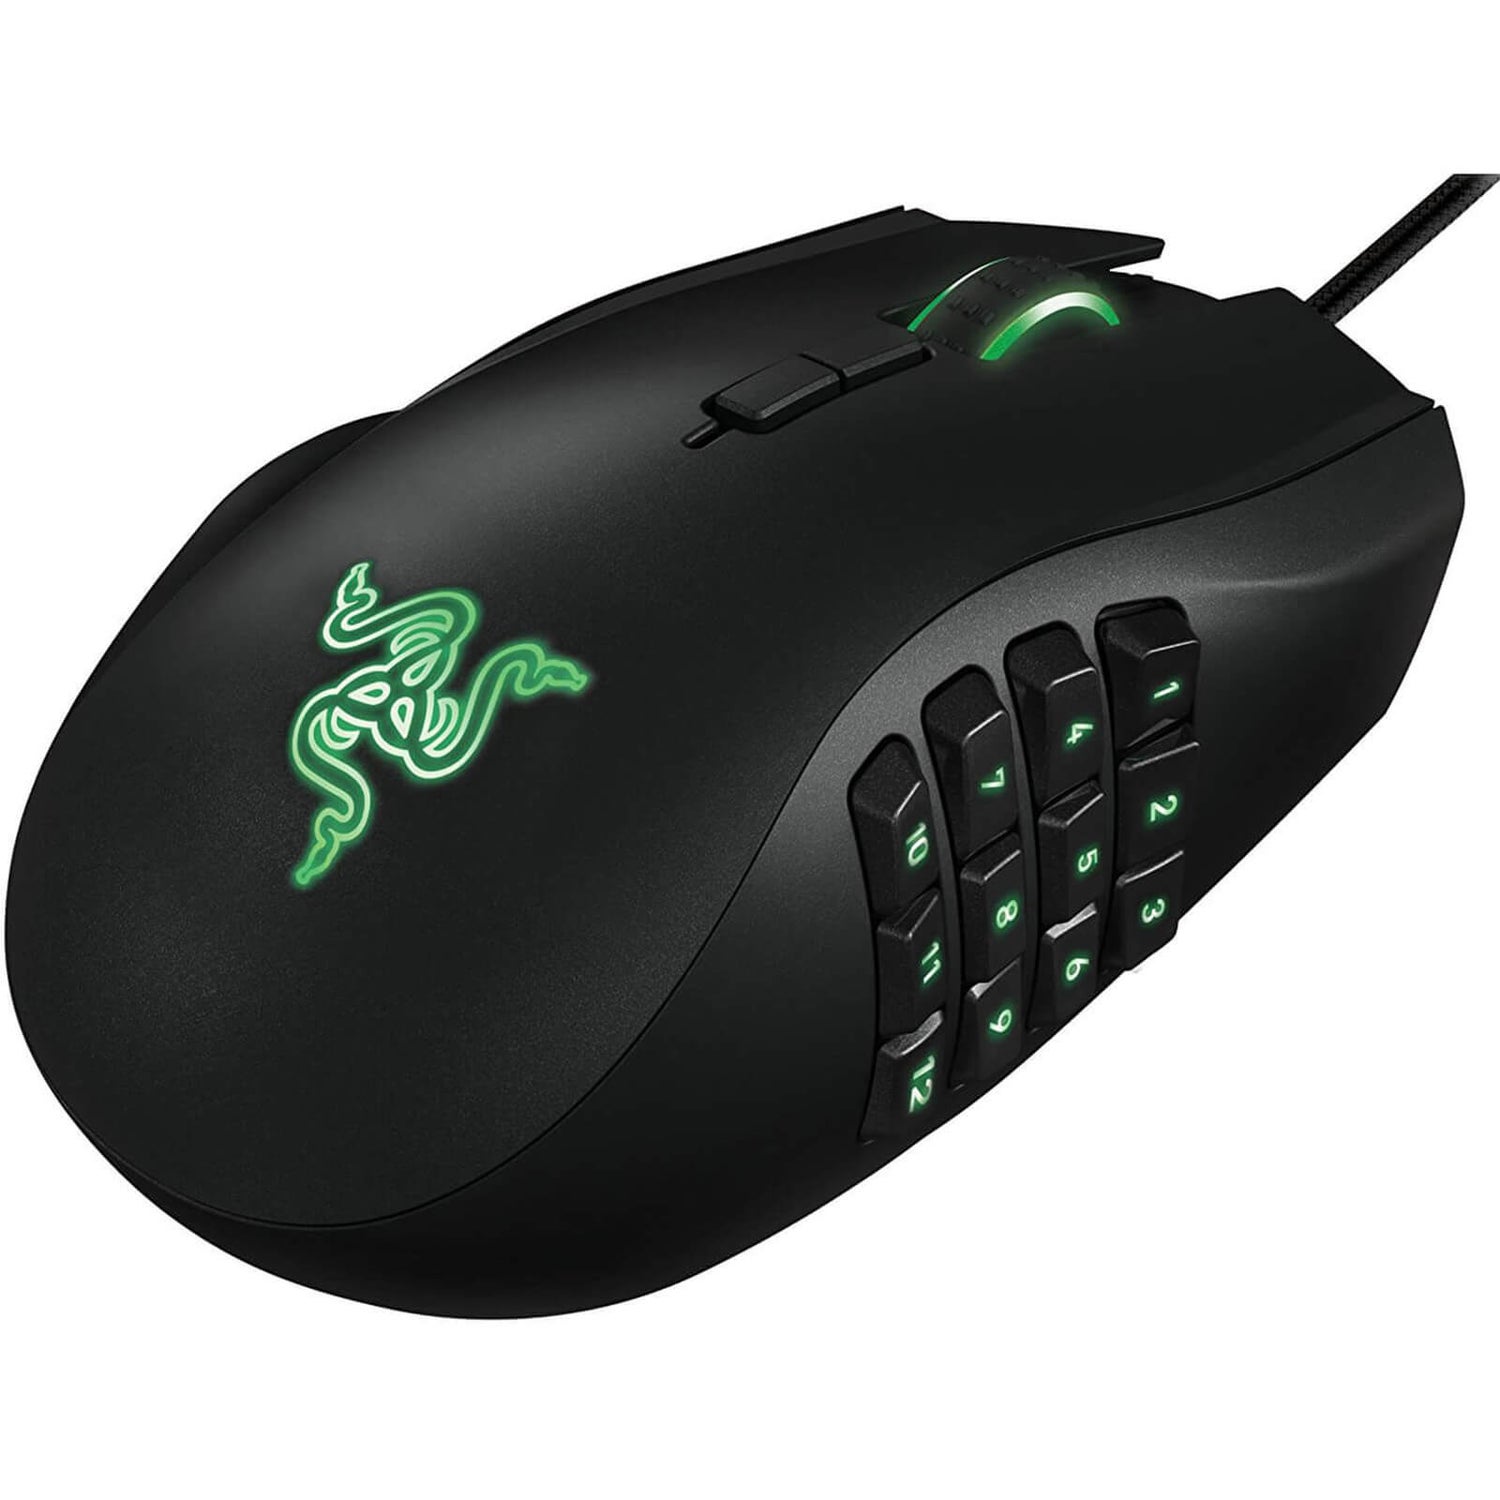 Razer Naga Left Handed Gaming Mouse - Black (2 Year Warranty)